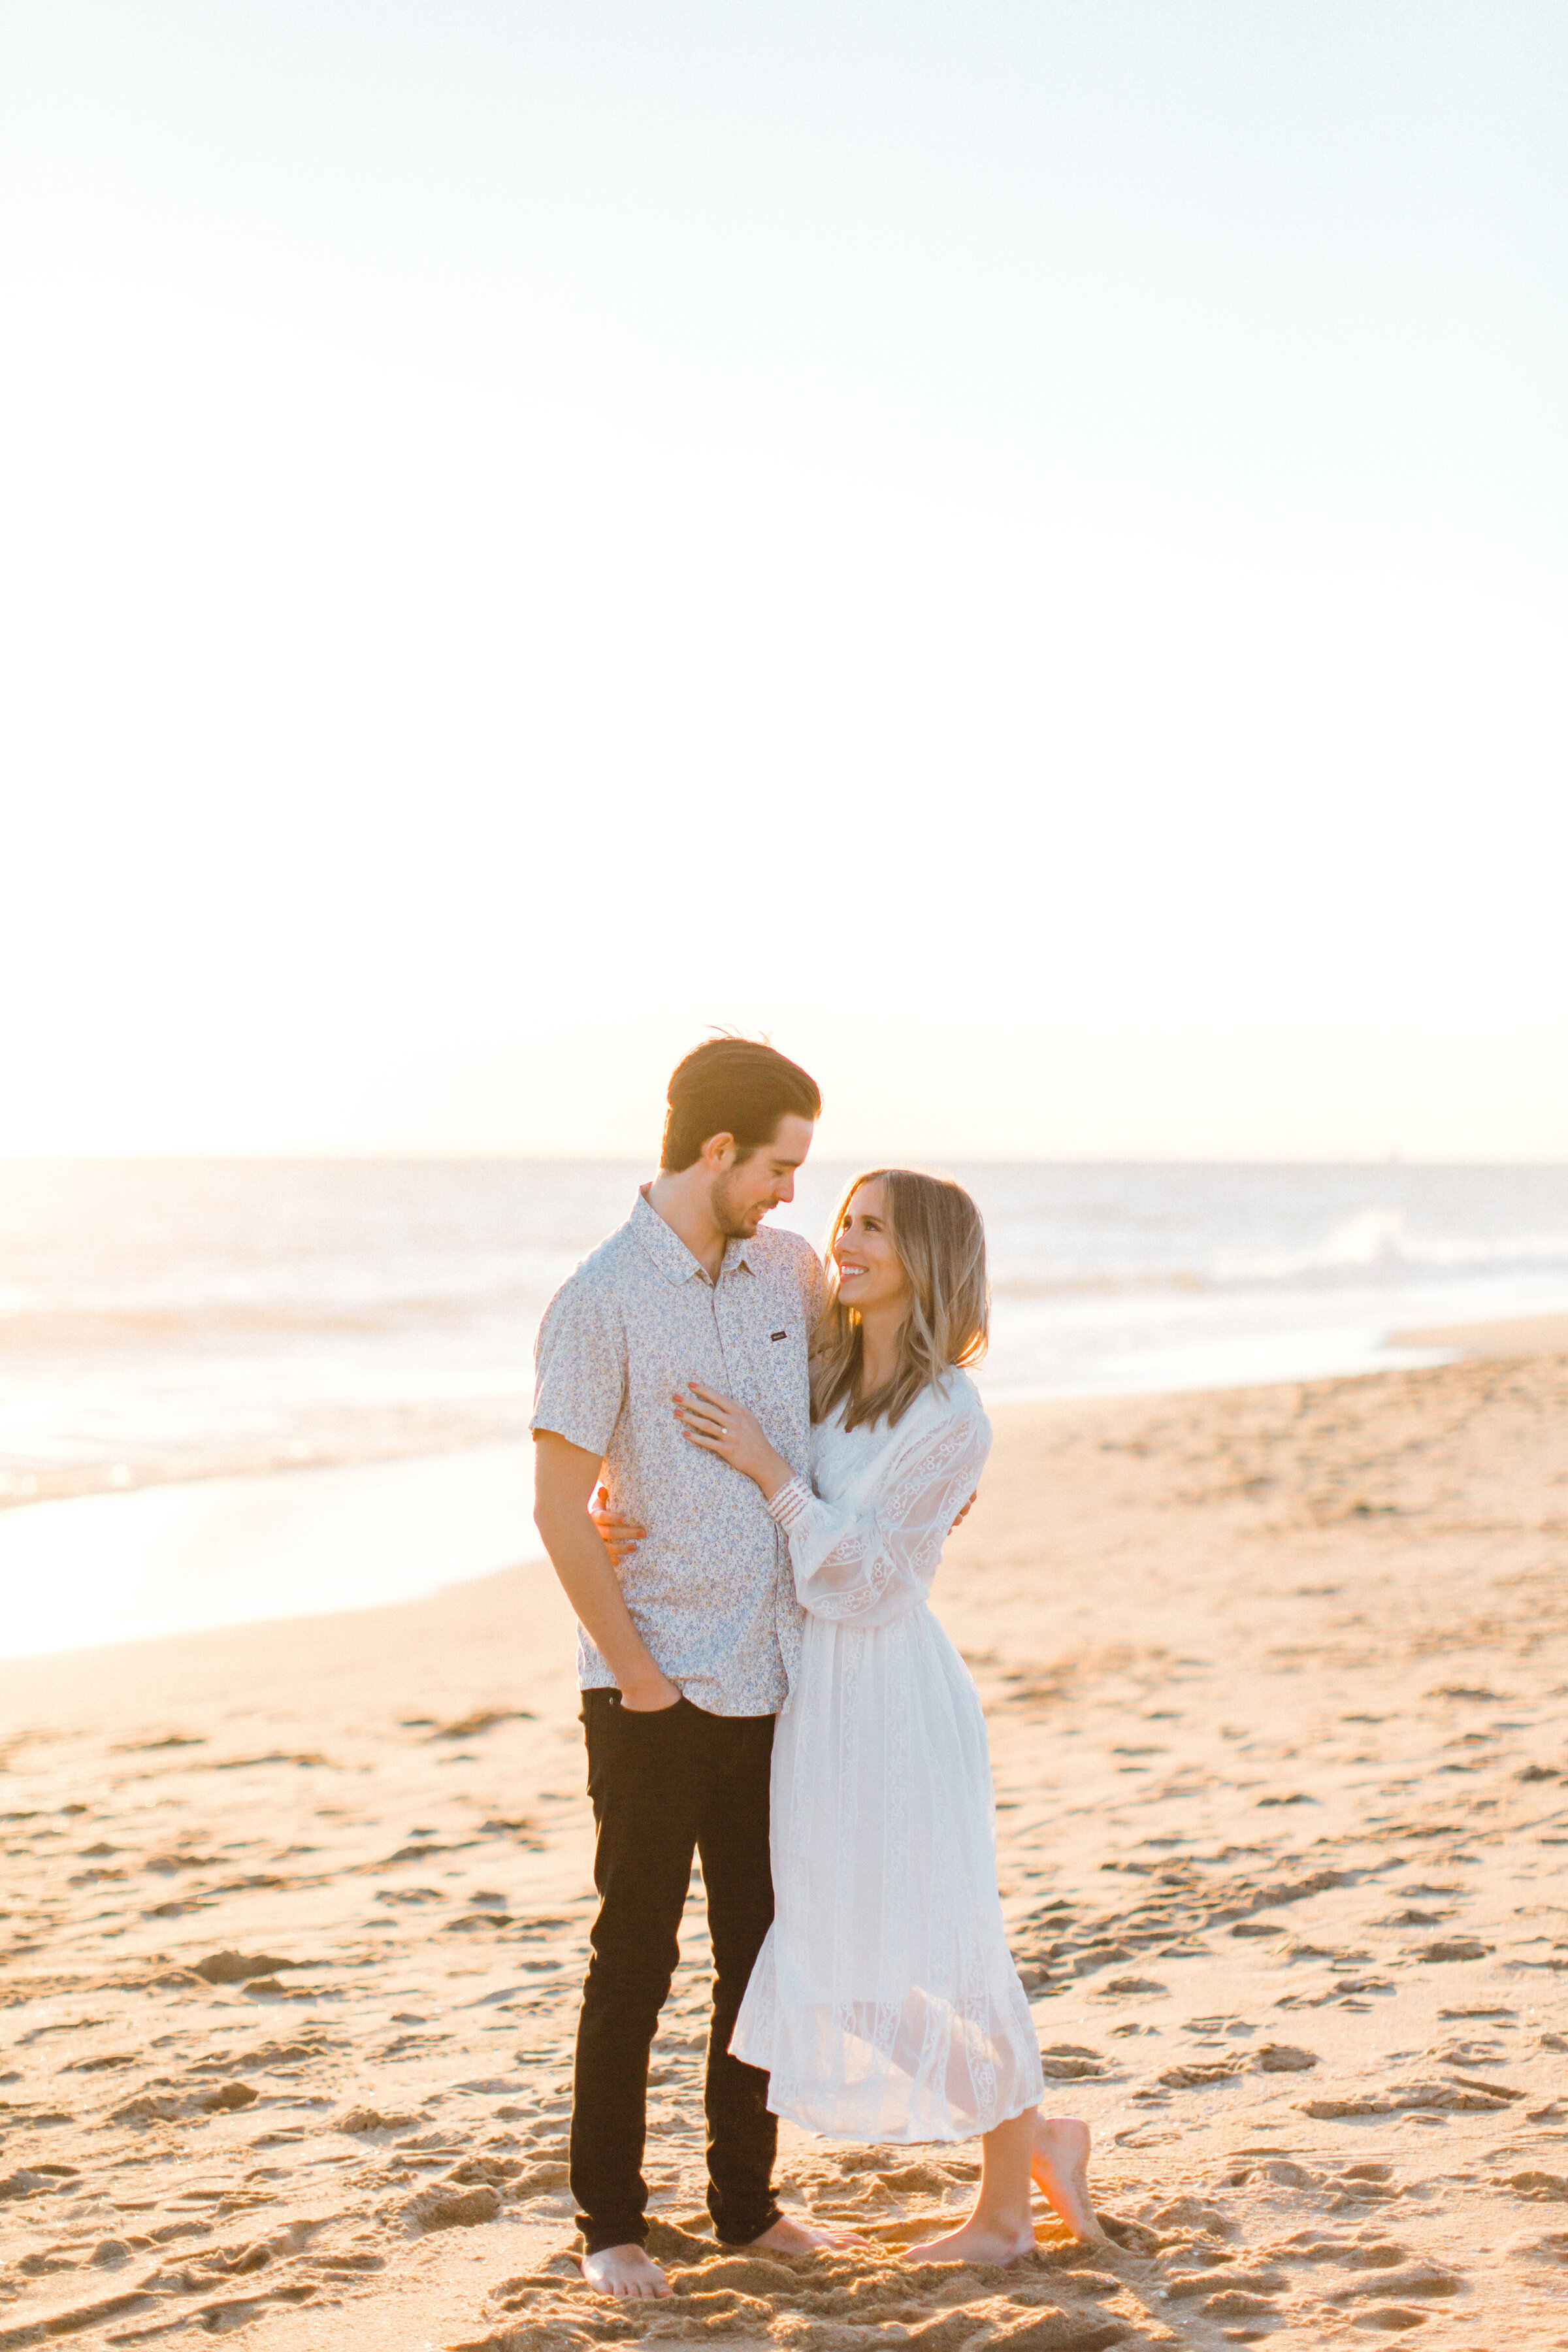 Max + Victoria | Engagement, Newport Beach (149 of 276)